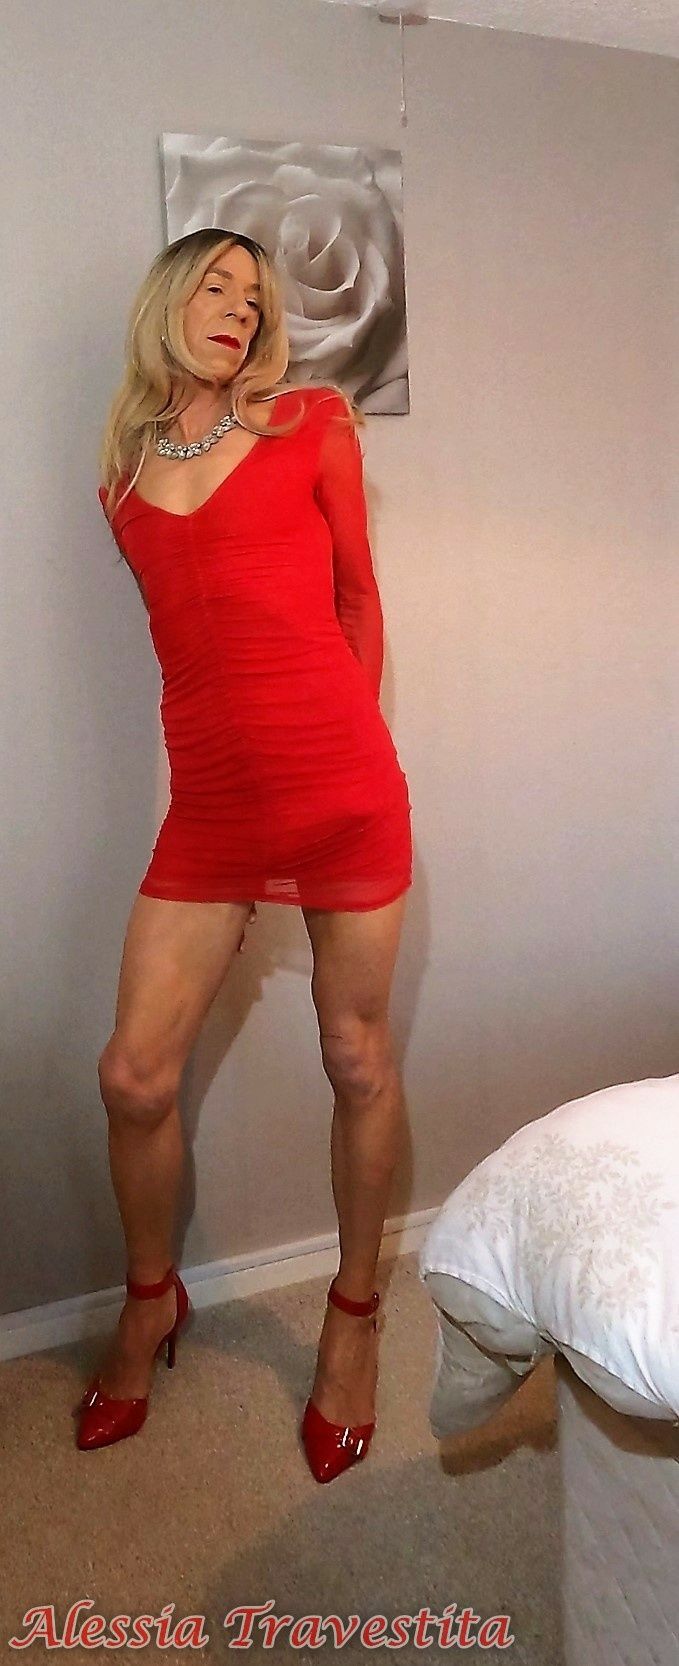 64 Alessia Travestita in Sheer Red Dress #32